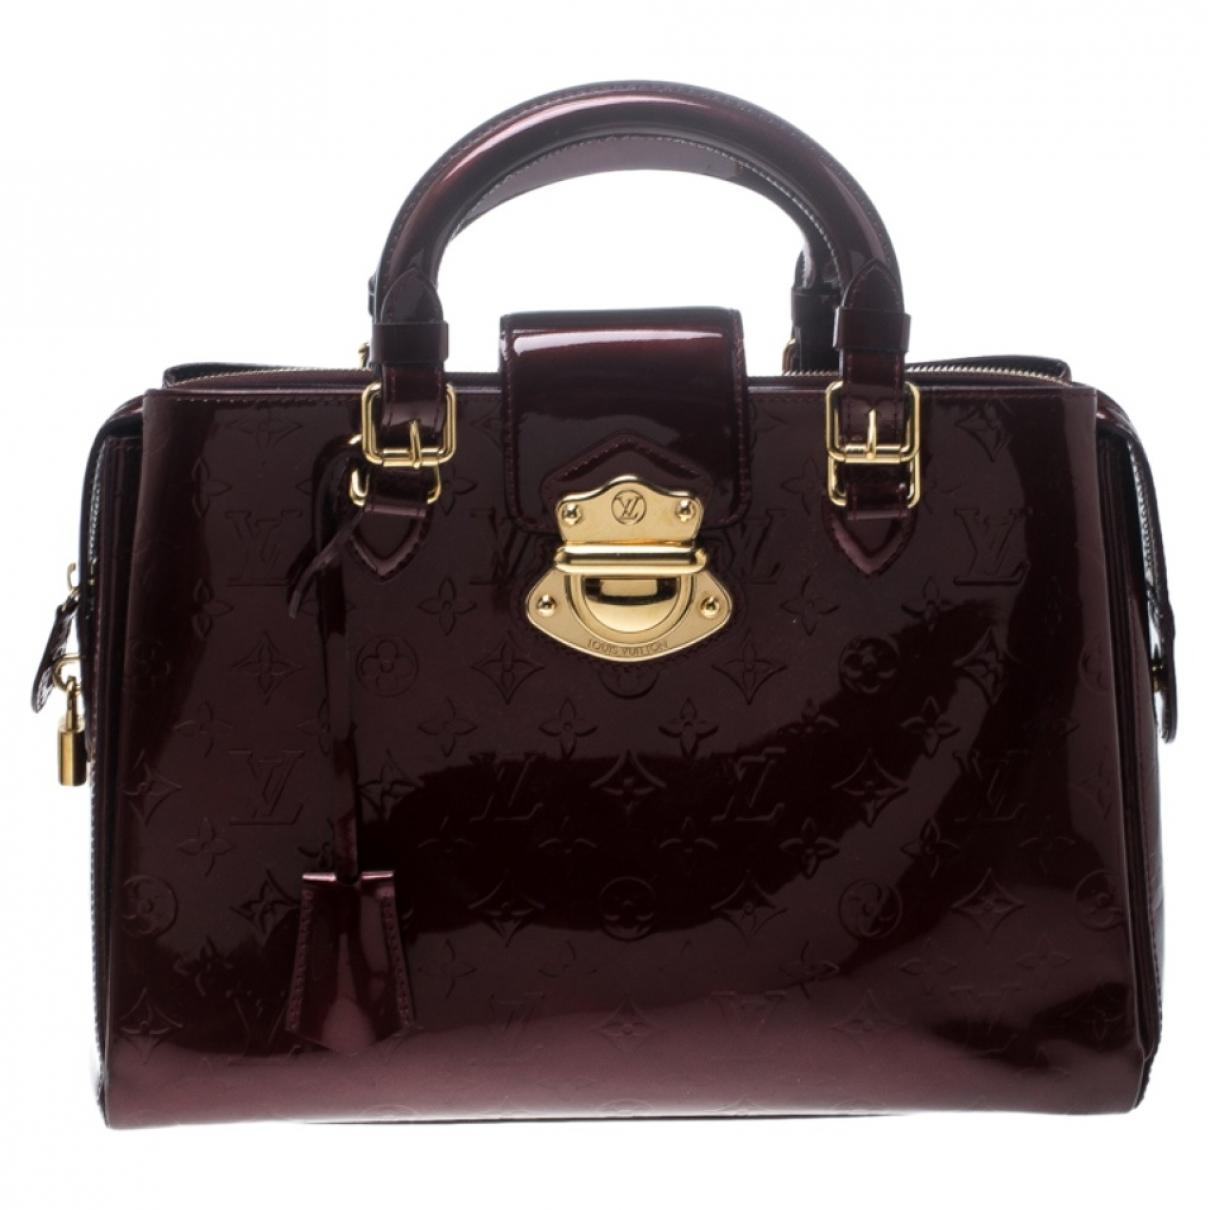 Lyst - Louis Vuitton Burgundy Patent Leather Handbag